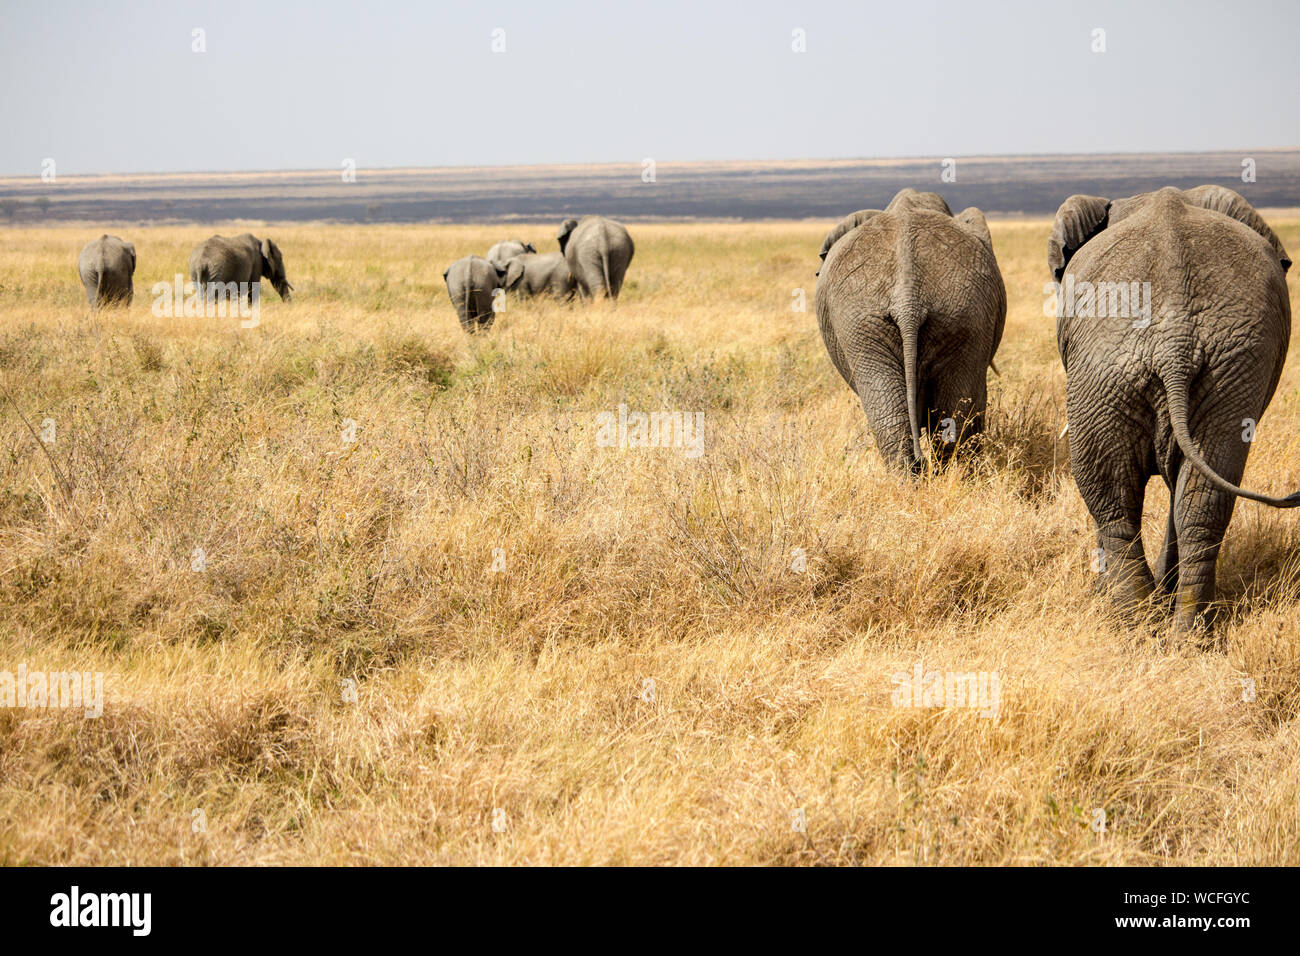 Elephants On Grassy Field At Ngorongoro Conservation Area Stock Photo